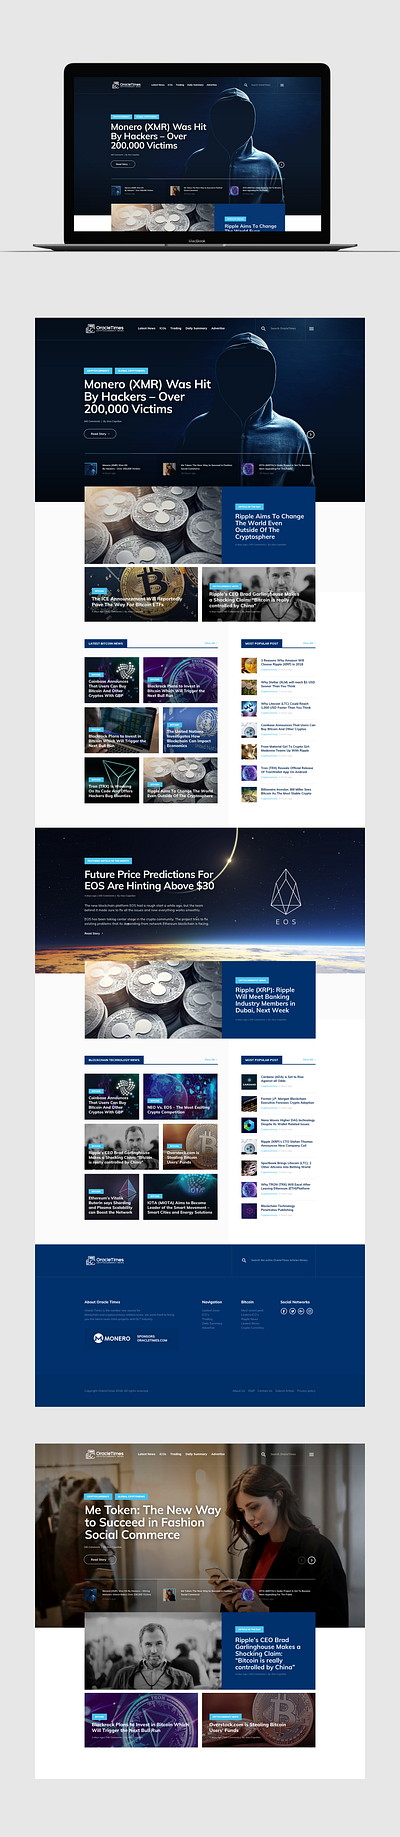 DesignFusion: Blending Art and Technology Online design website web design webdesign website design